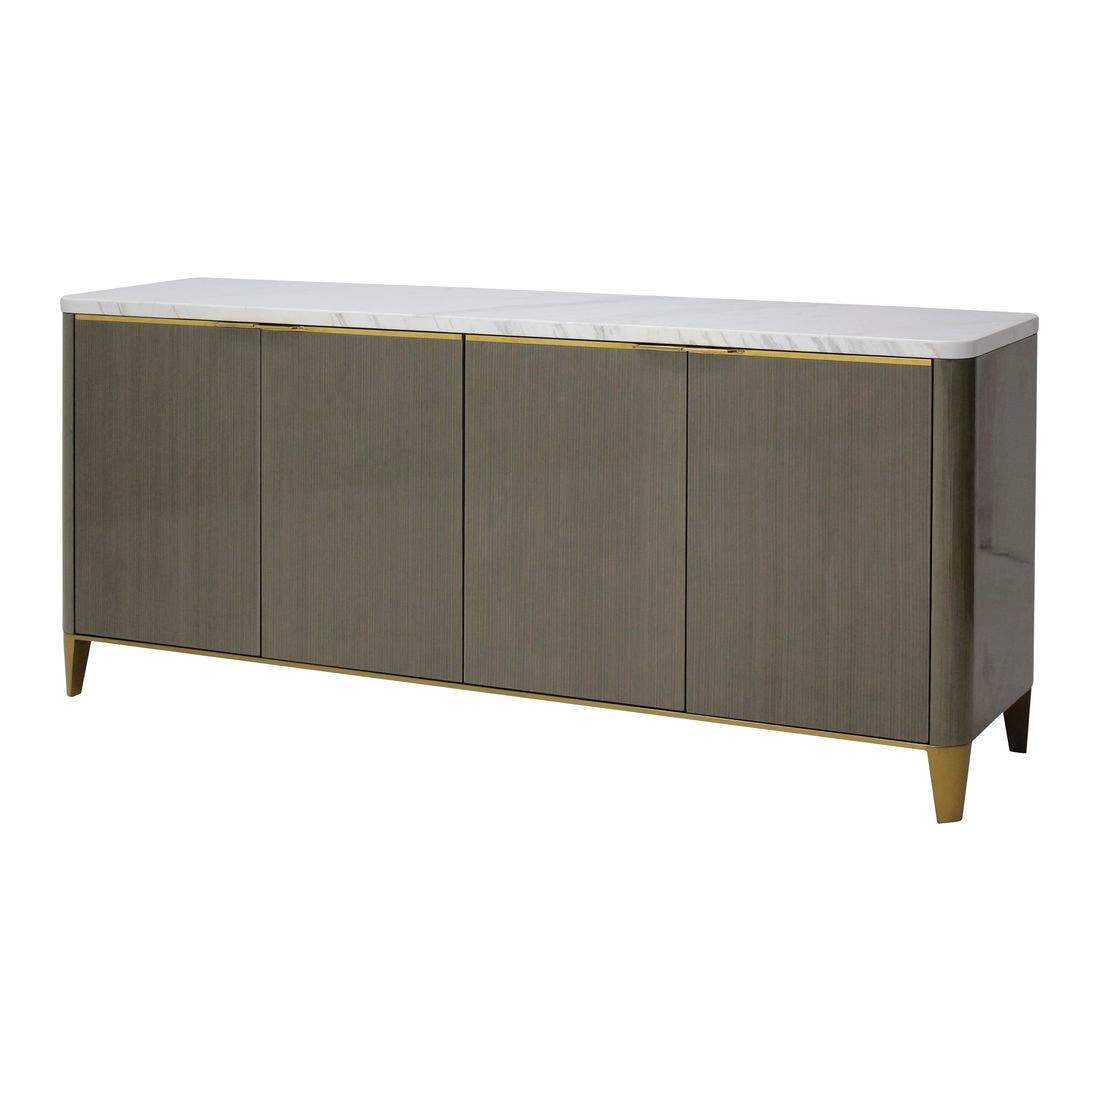 19156857-narito-furniture-storage-organization-storage-furniture-01